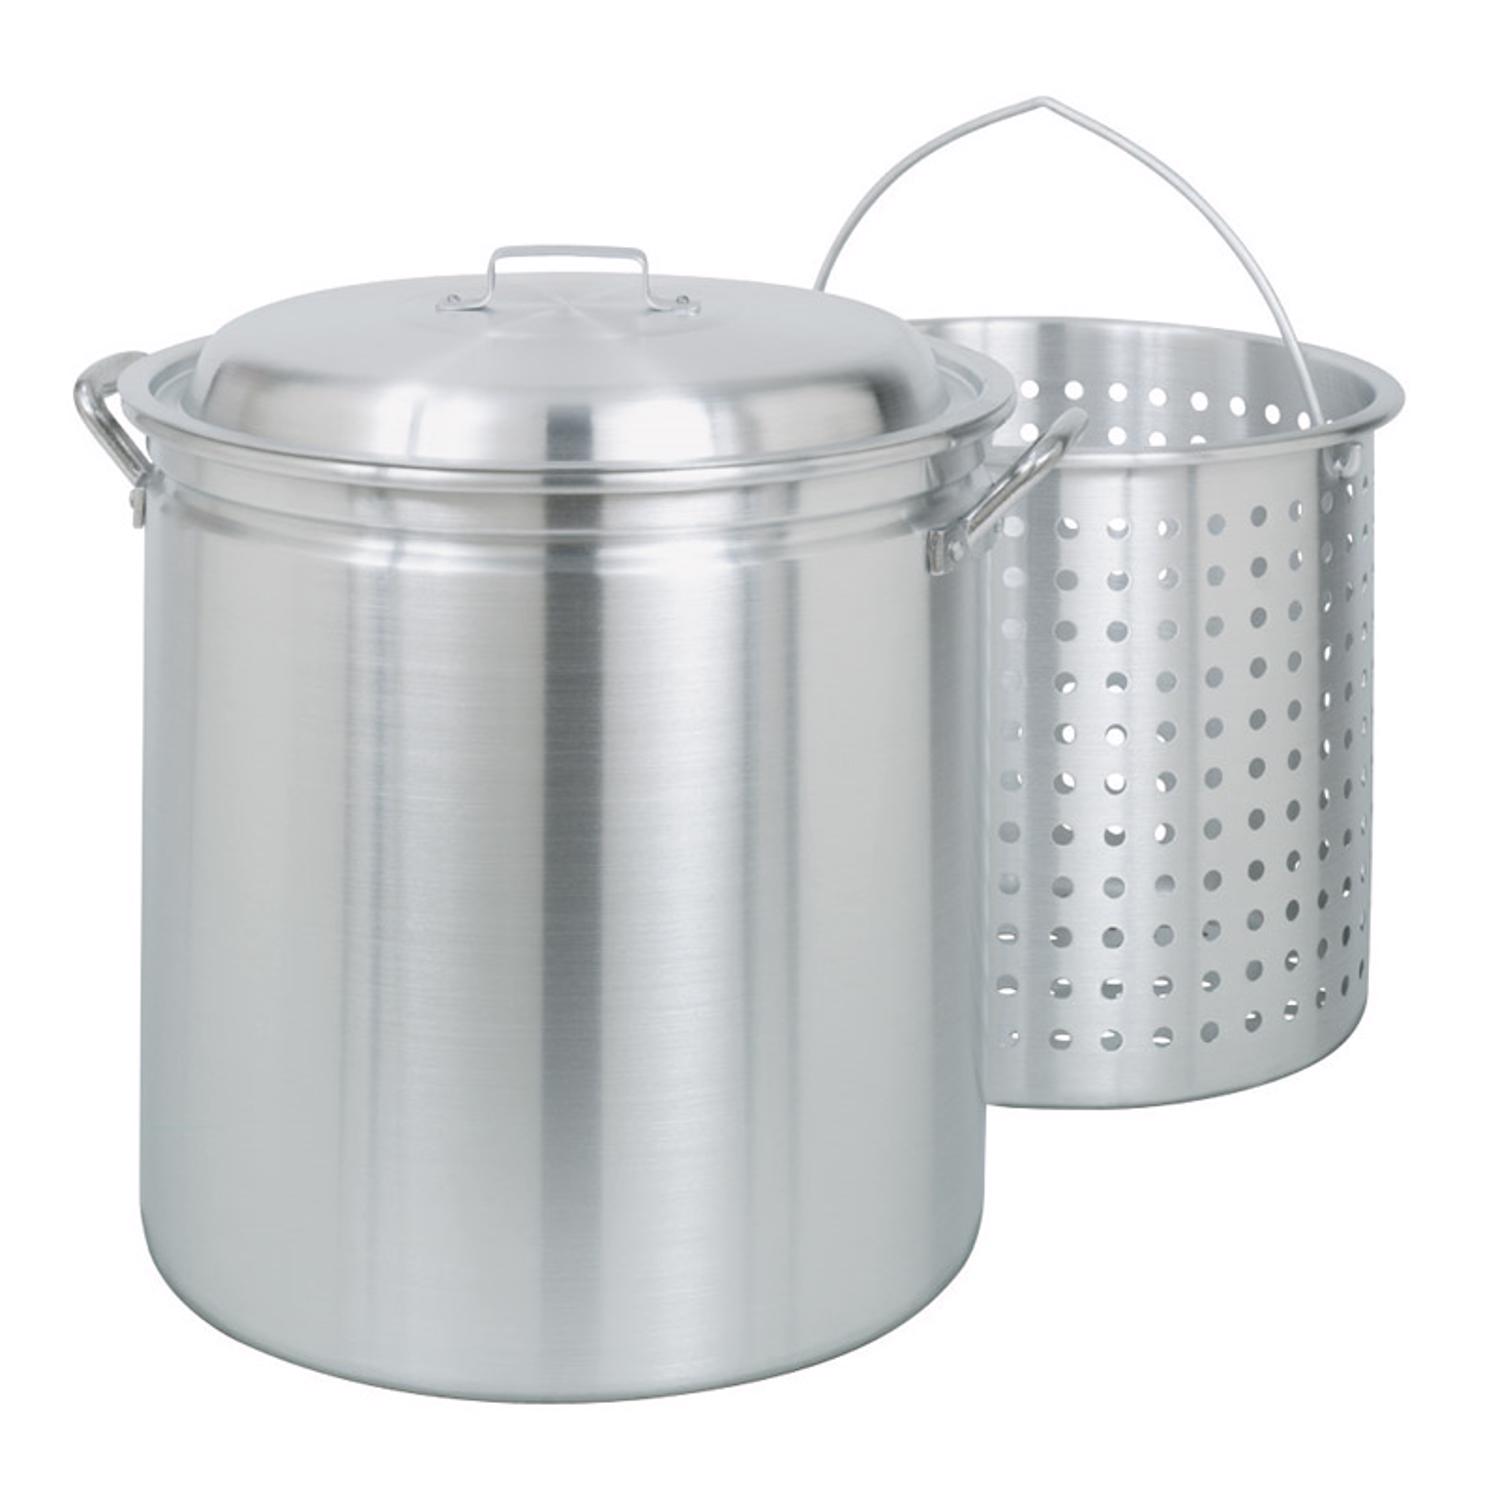 Carolina Cooker ; 40 qt. Aluminum Stock Pot with Lid Cast Iron & Cooking Supplies